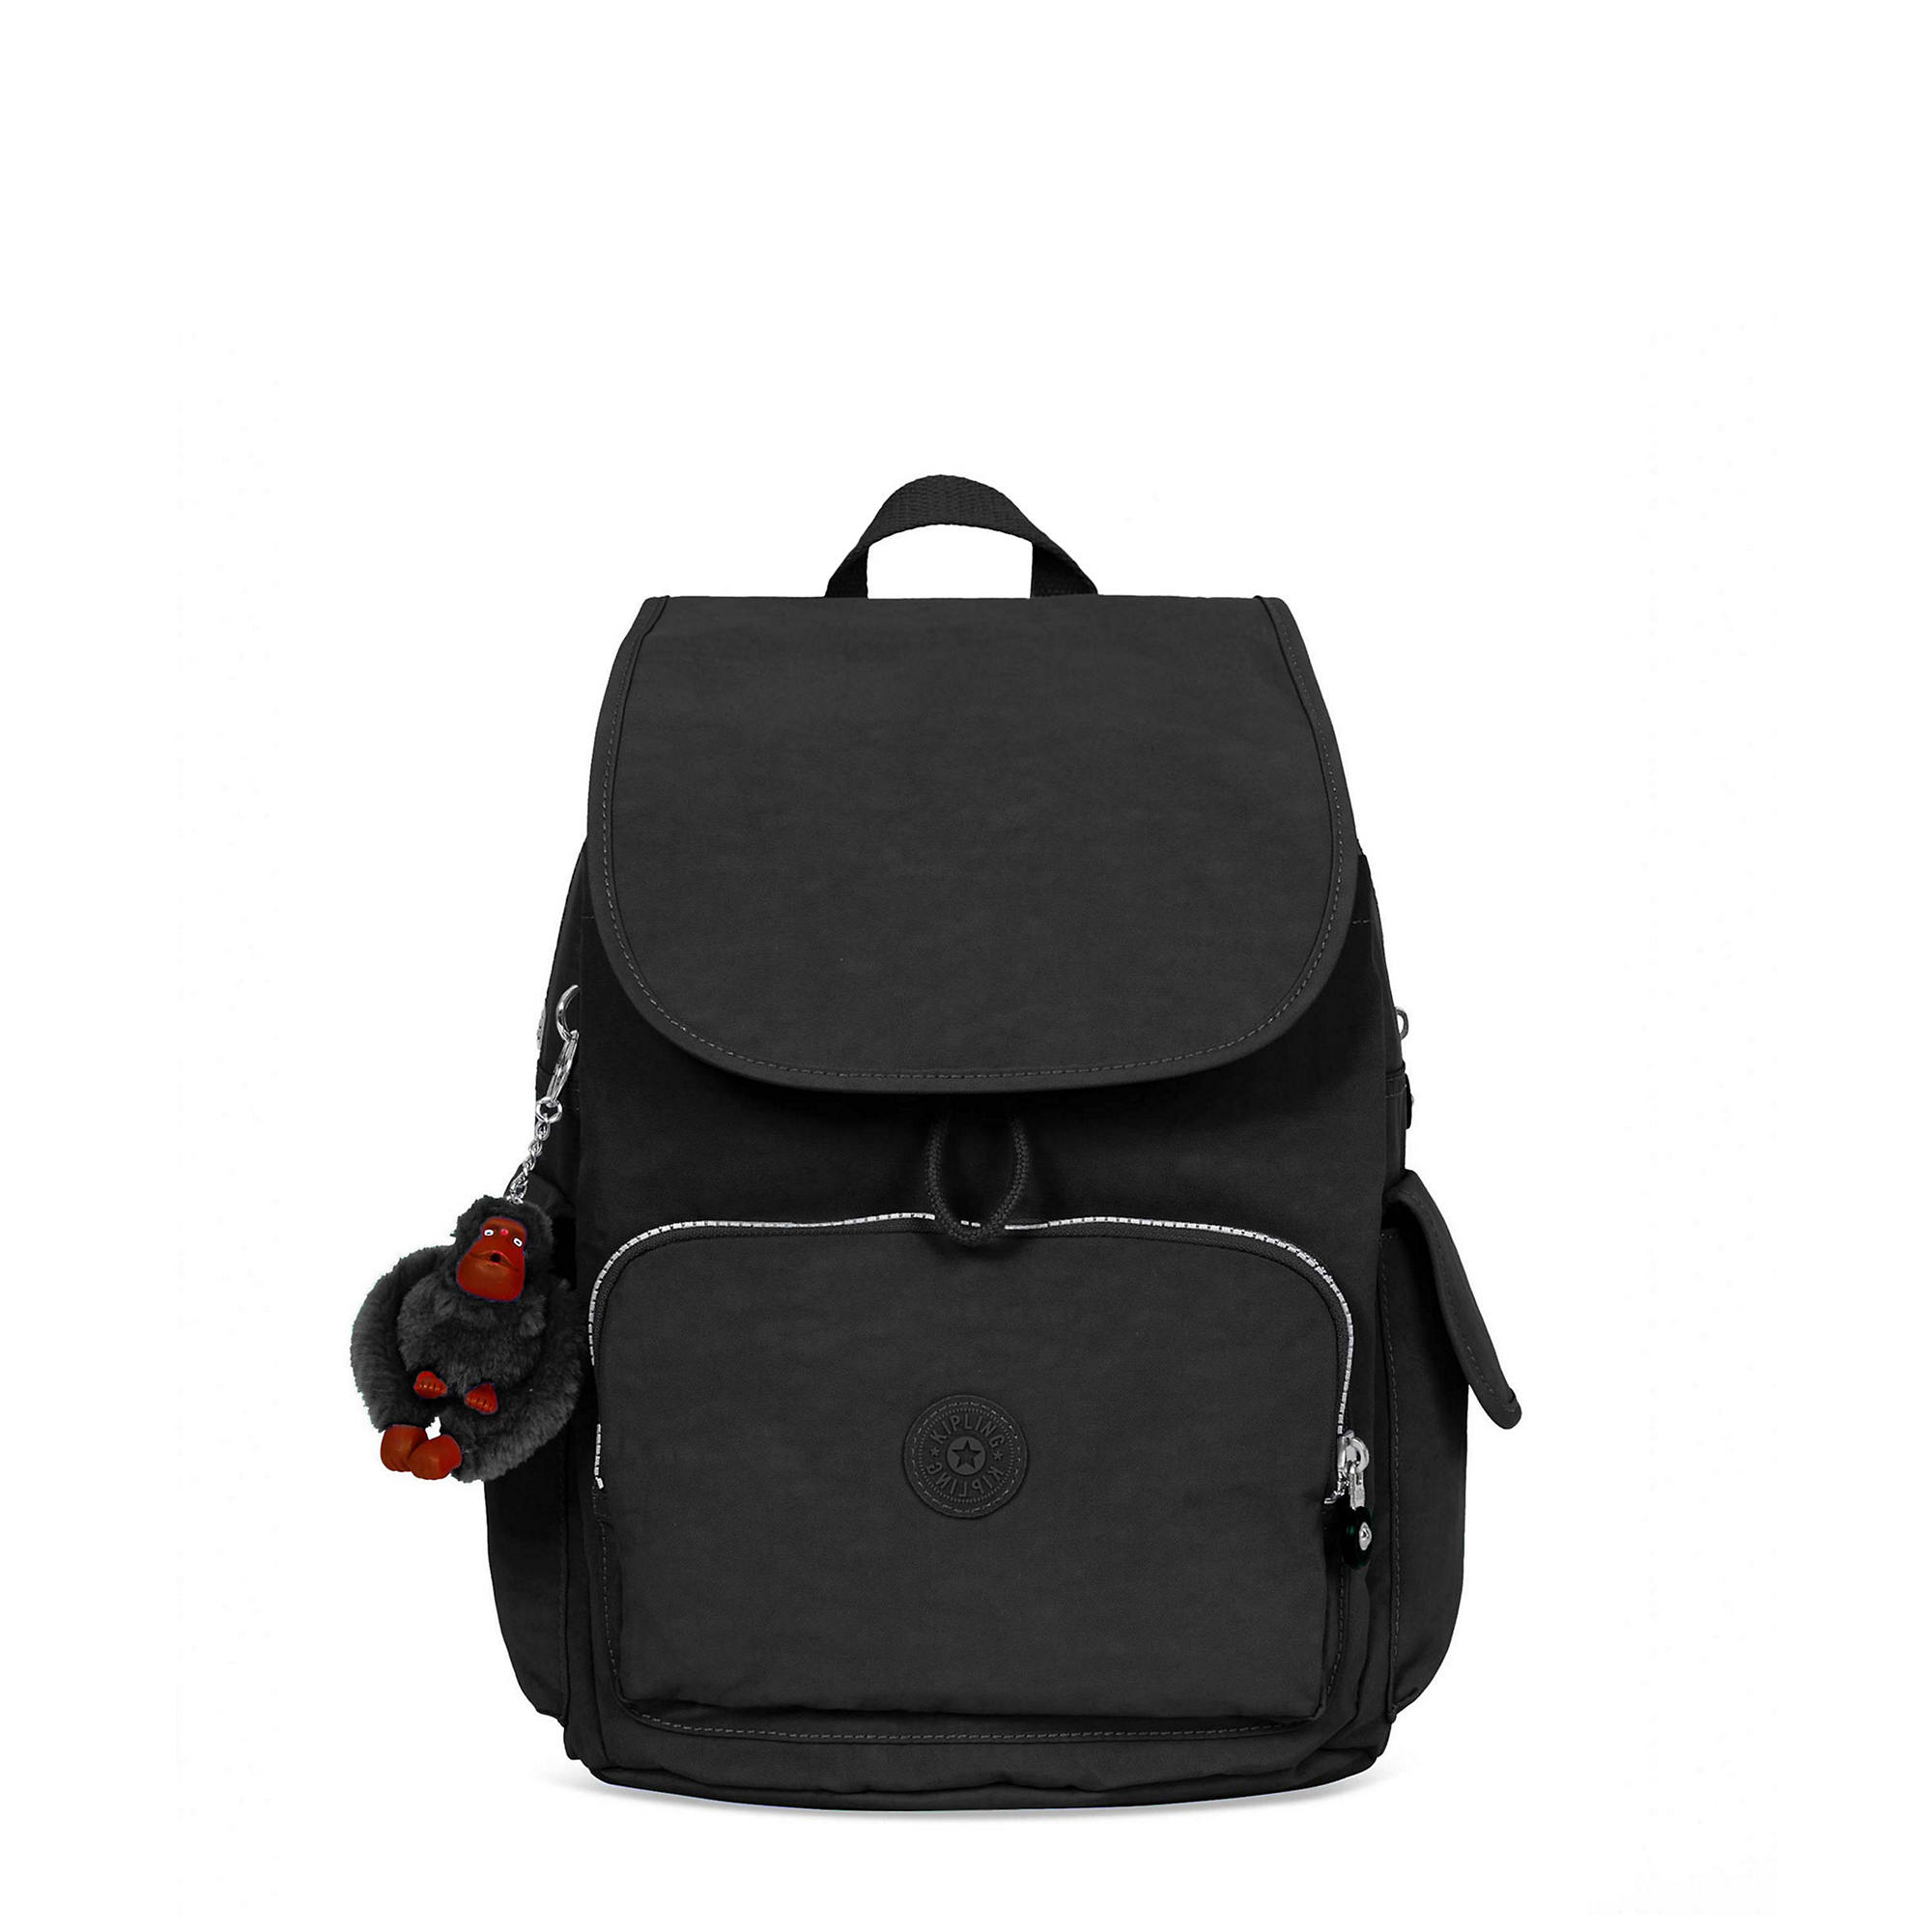 Kipling City Pack Medium Metallic Backpack | eBay